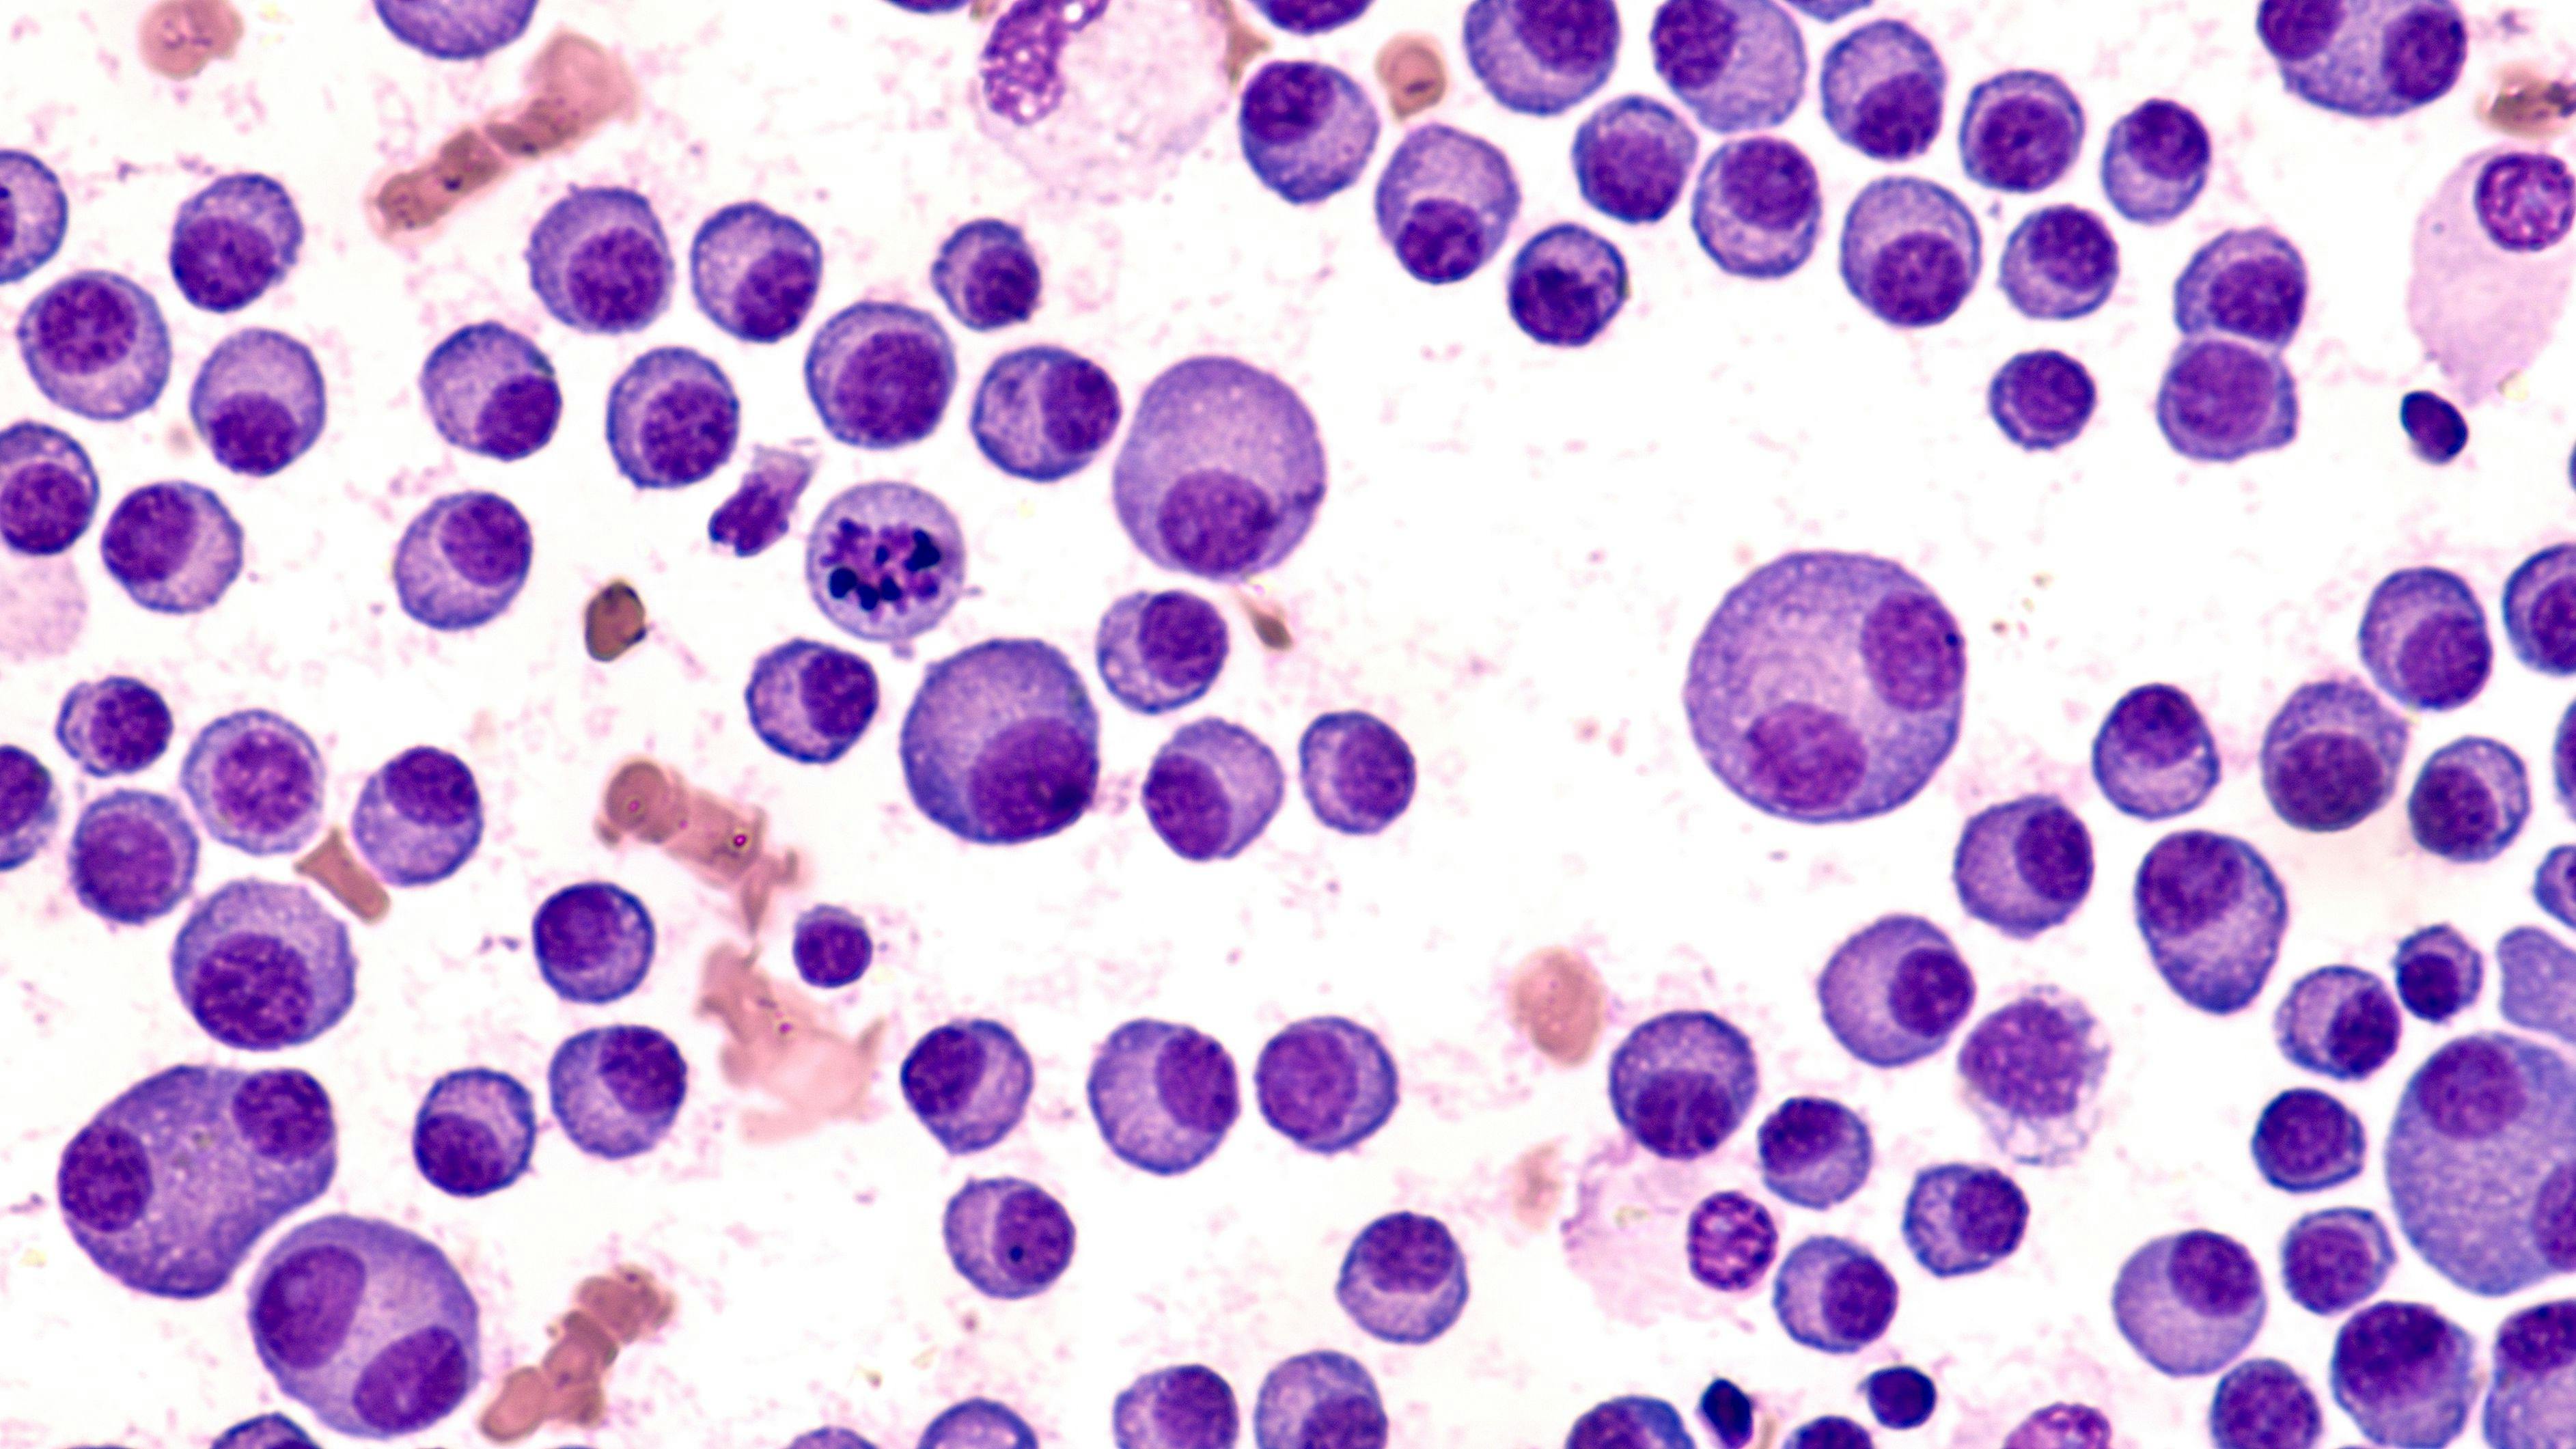 Bone marrow aspirate cytology, multiple myeloma -- Image credit: David A Litman | stock.adobe.com